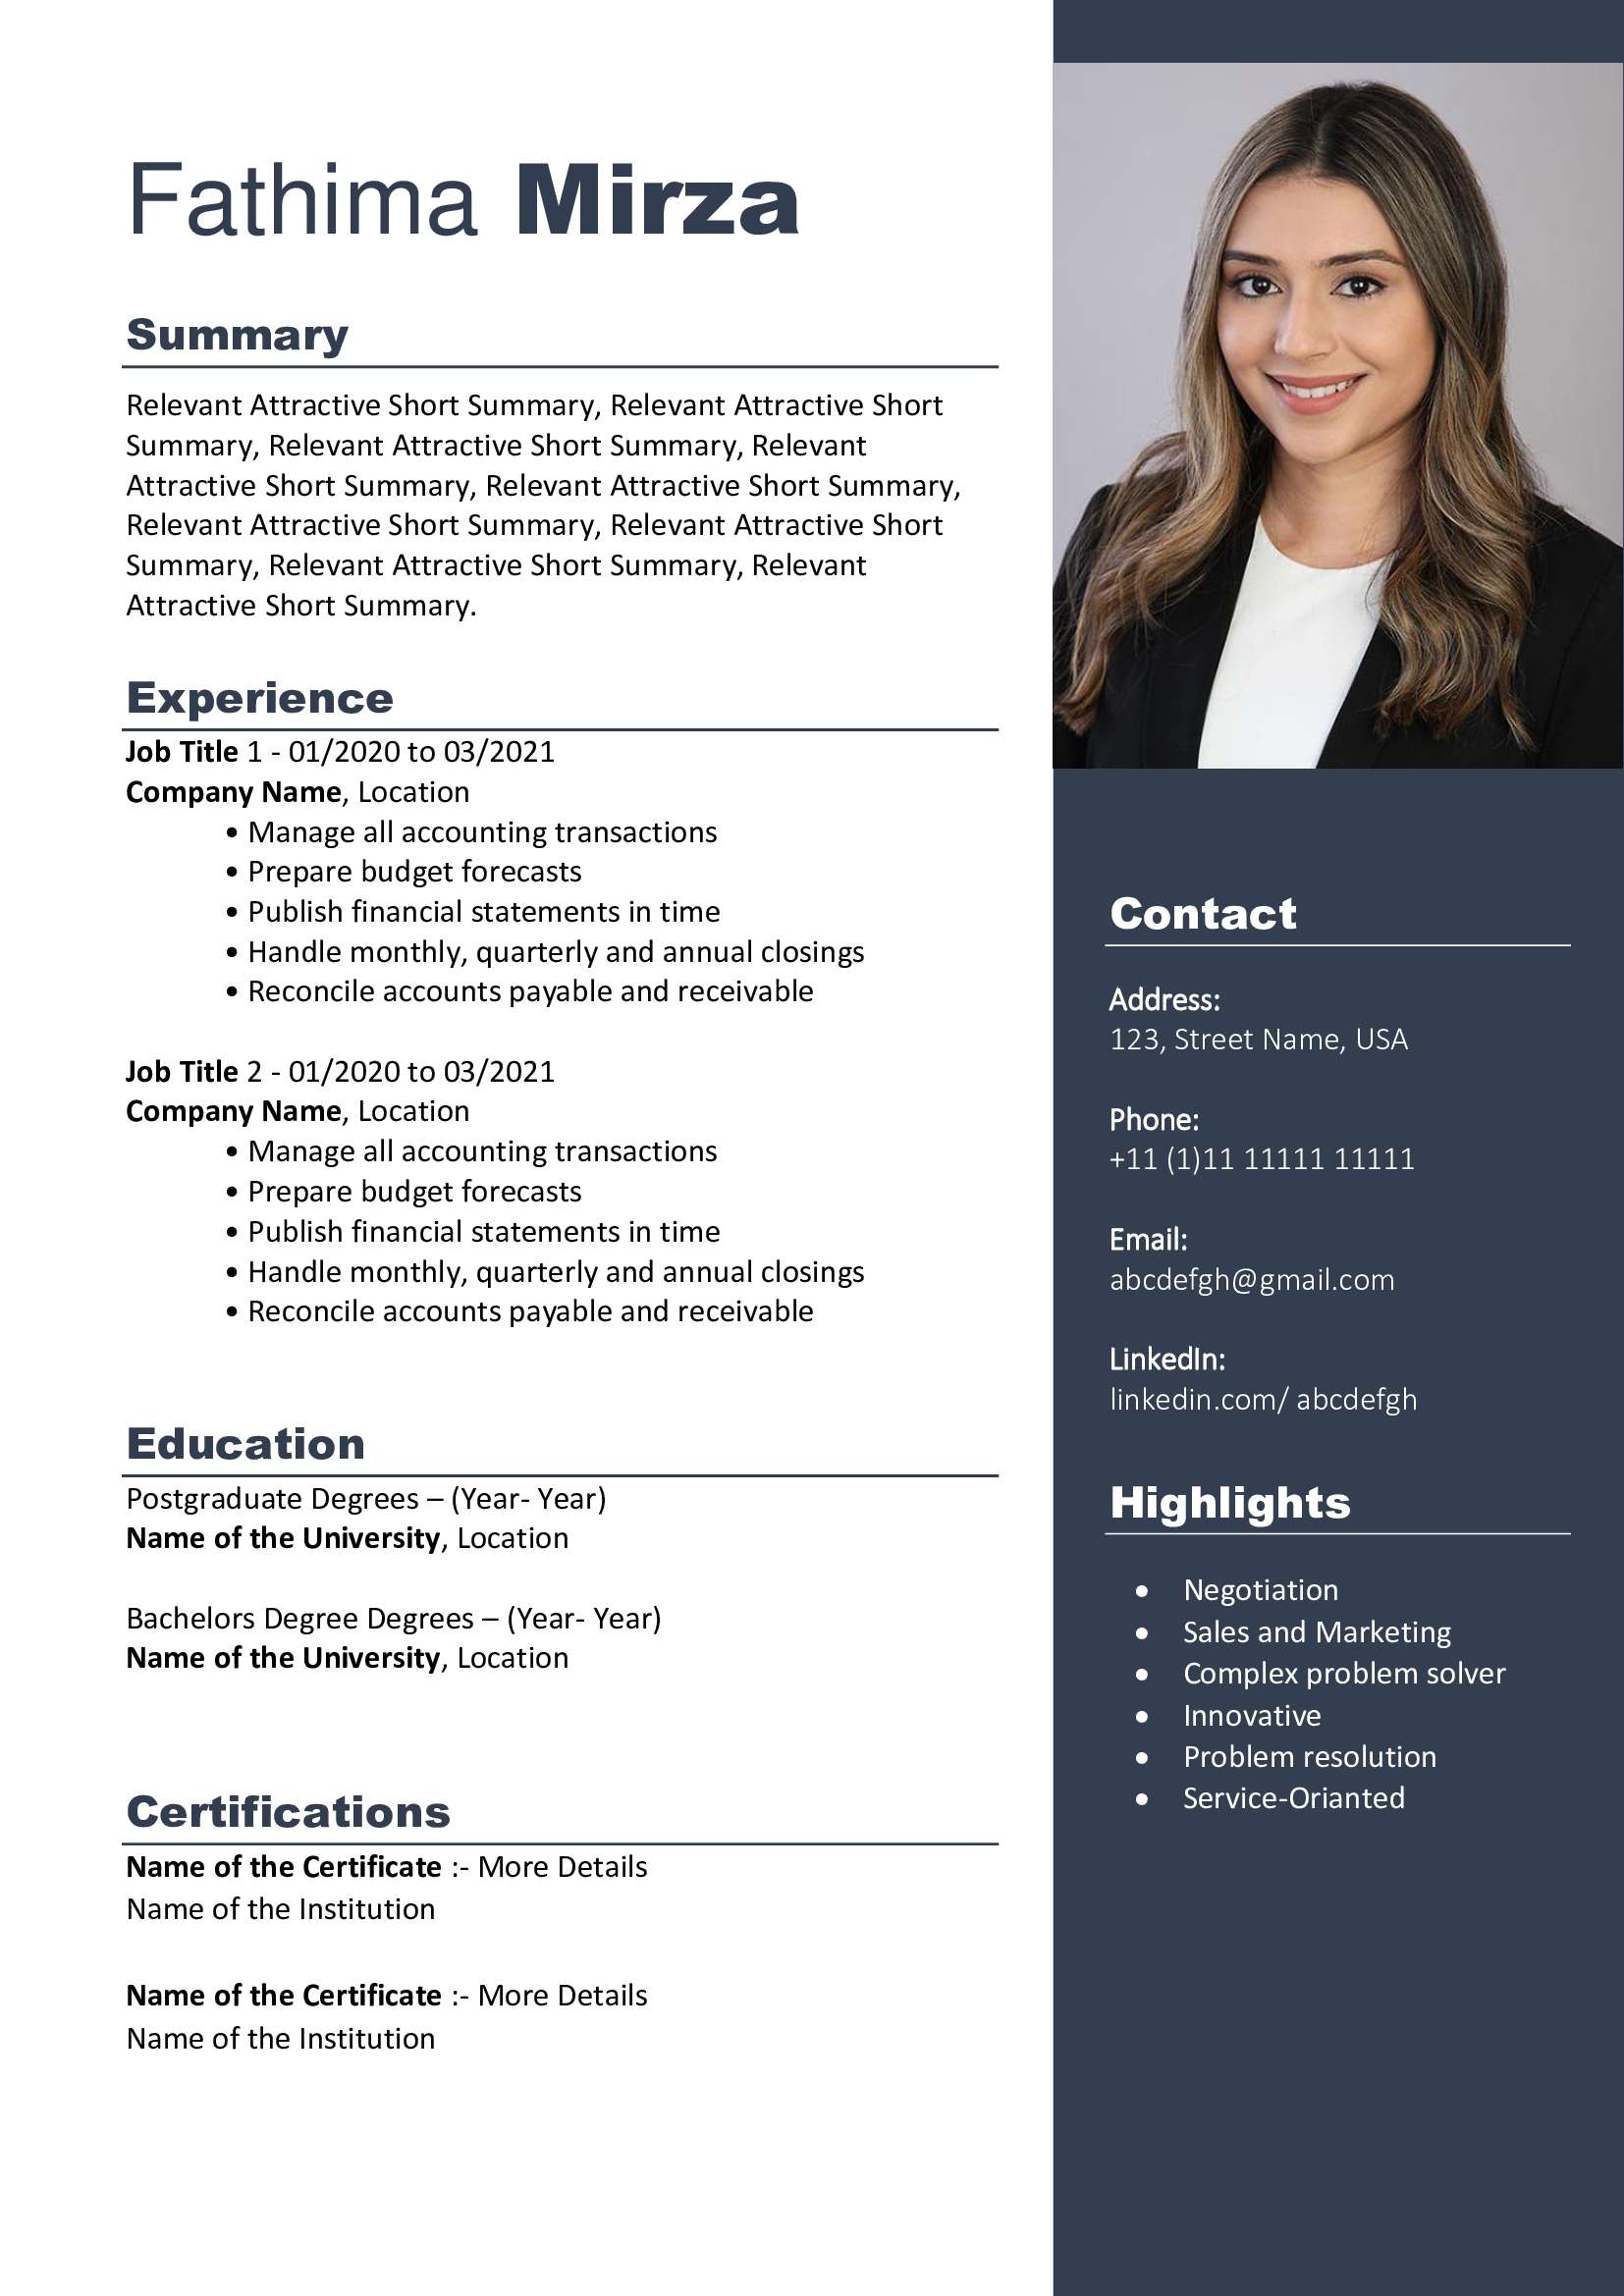 Free Download Professional CV Templates - Editable DOC - Fathima Mirza